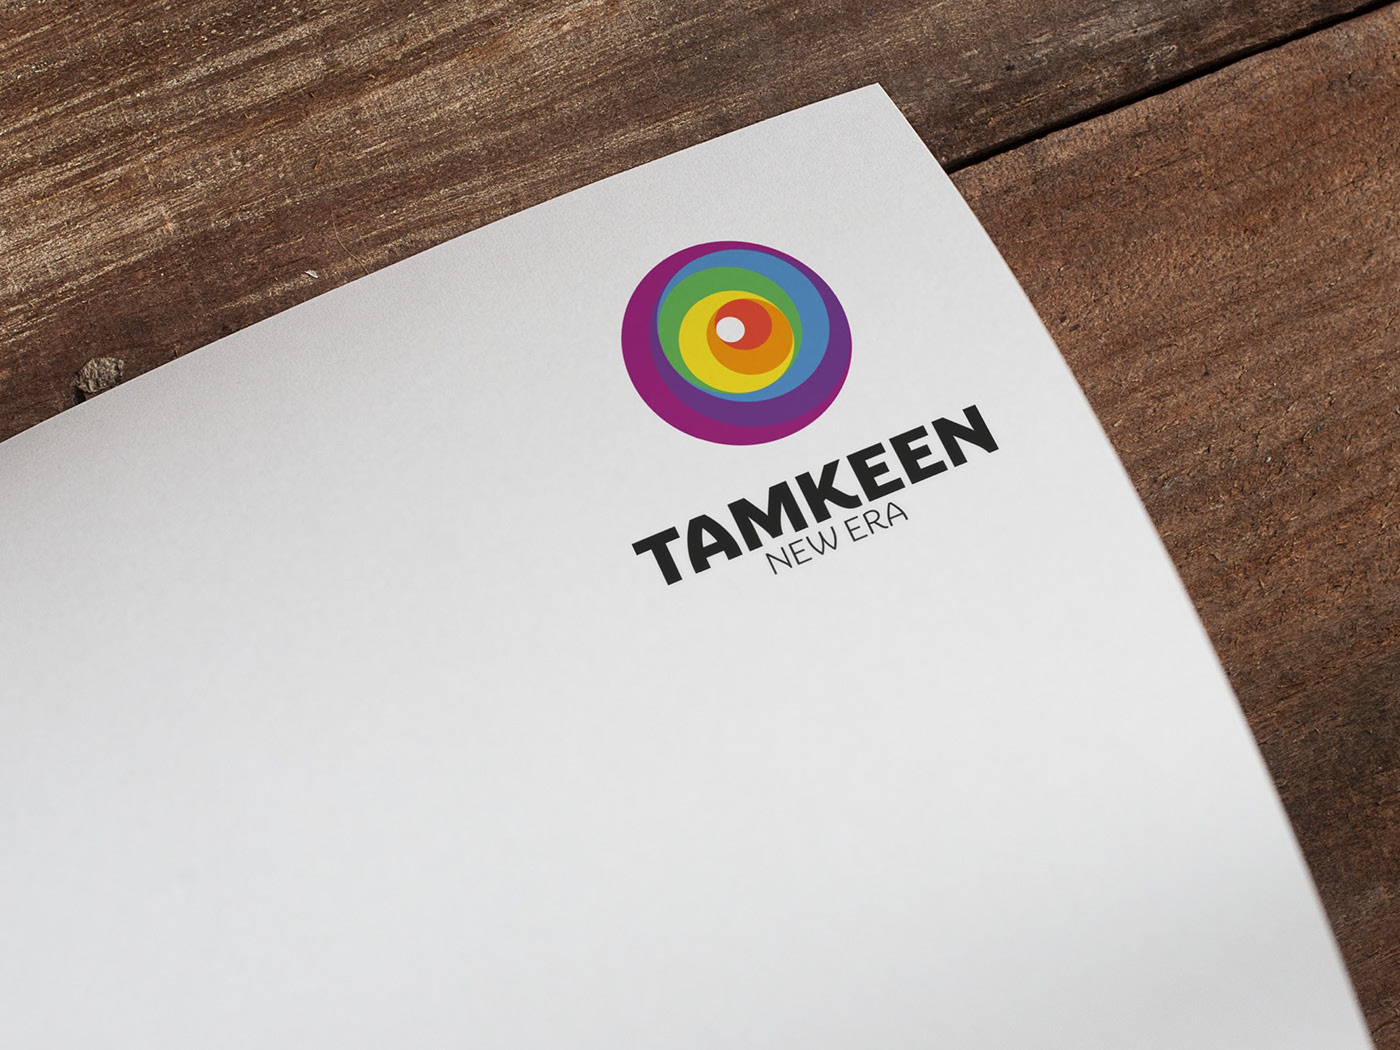 revamping logo Tamkeen brand charkas type identity